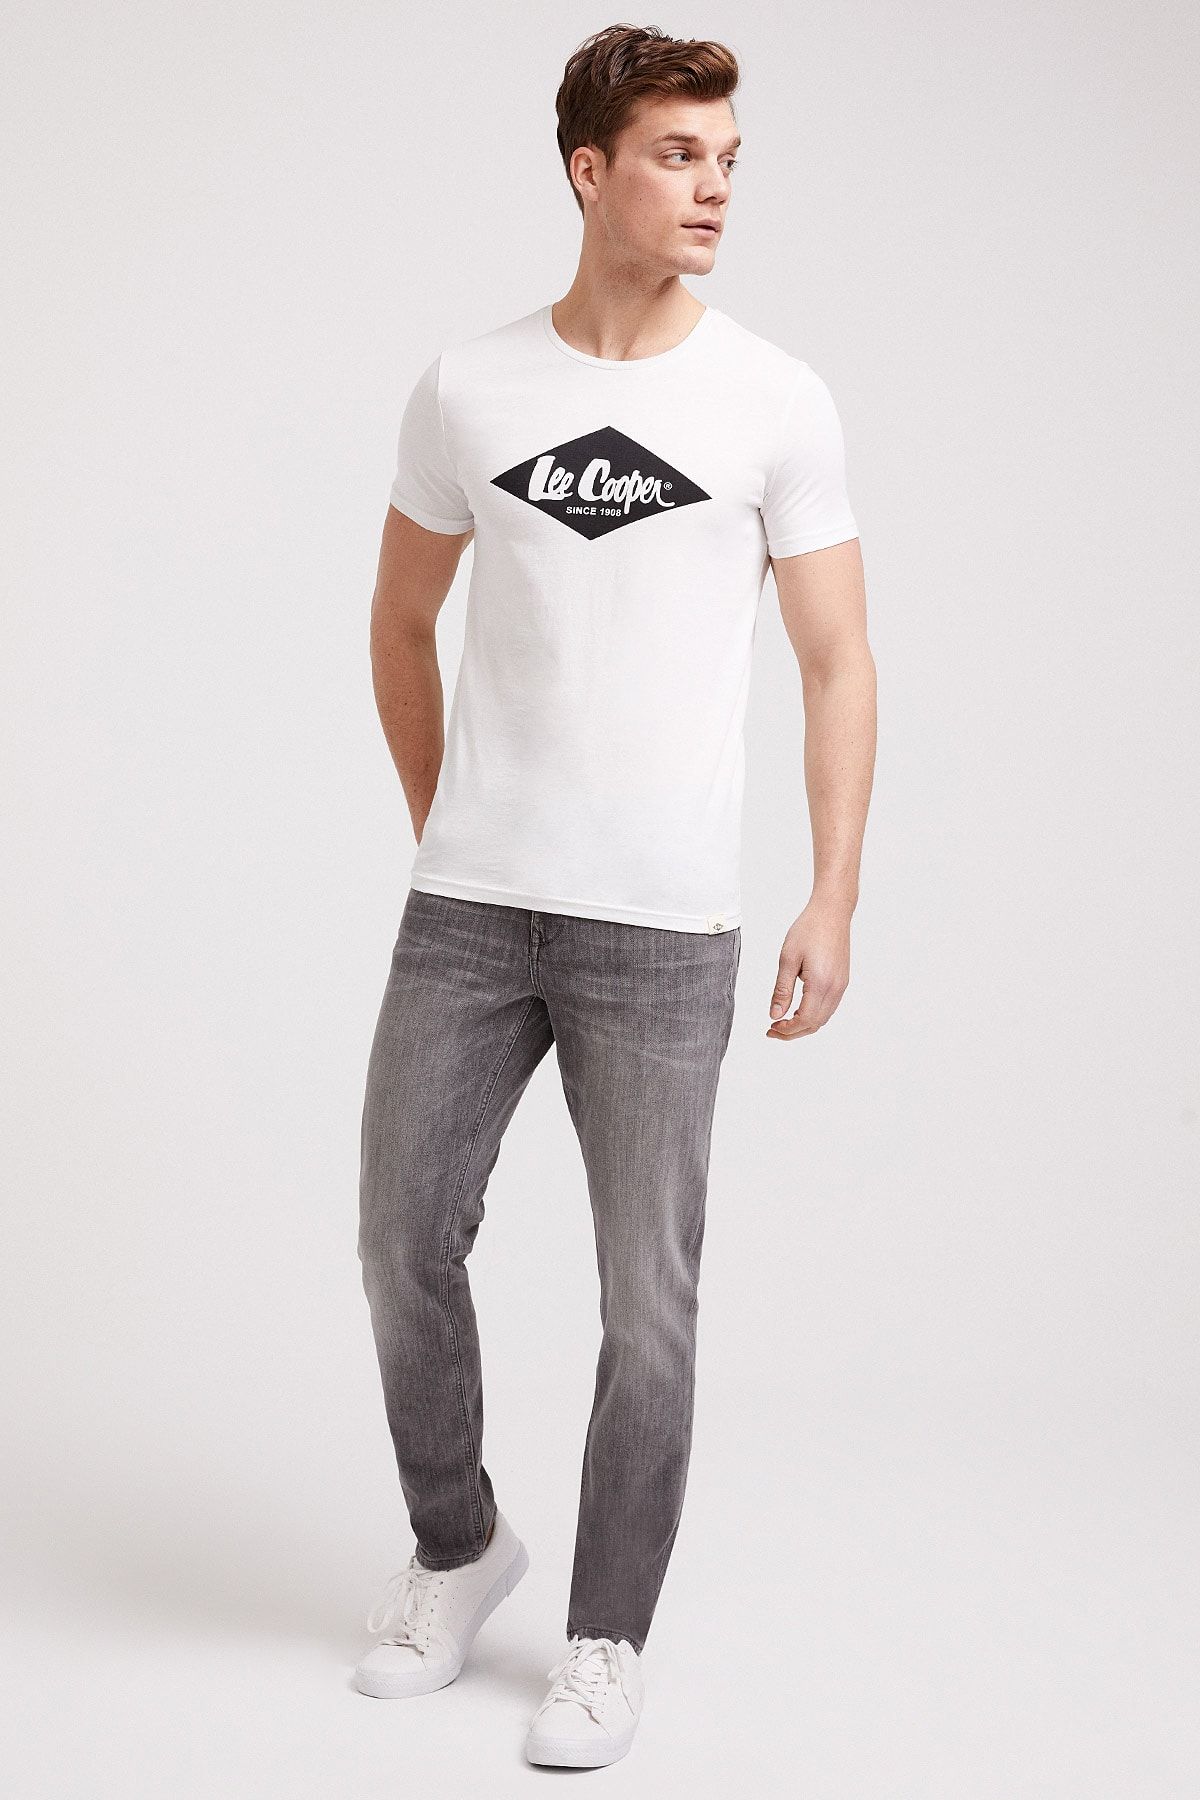 Lee Cooper Erkek Summerlogo O Yaka T-Shirt Beyaz 202 LCM 242008